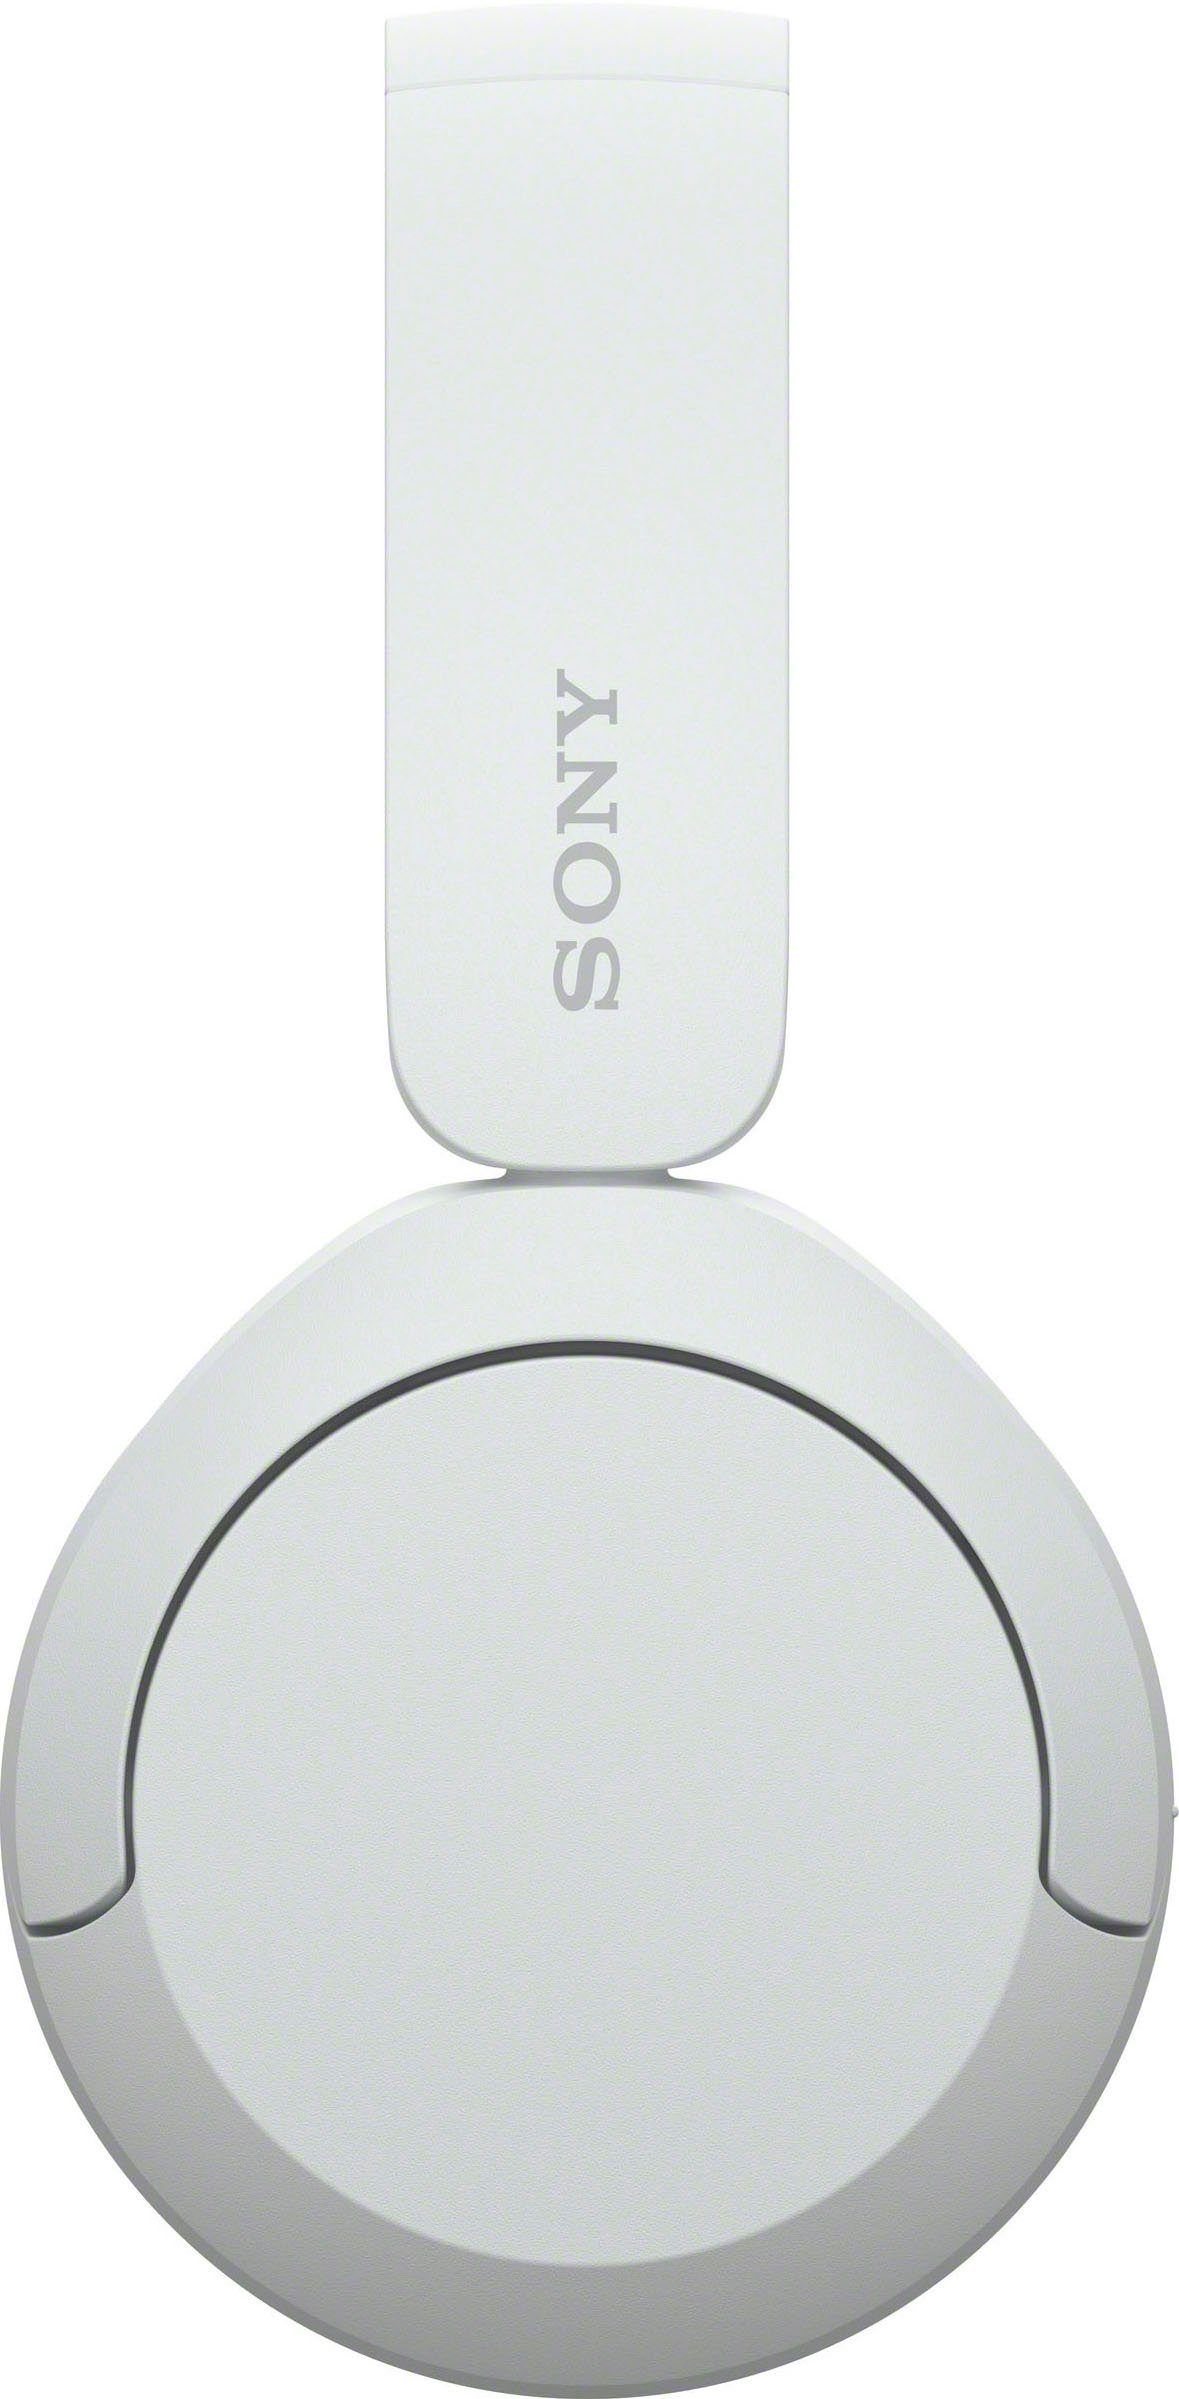 50 Google Rauschunterdrückung, Akkulaufzeit) Siri, On-Ear-Kopfhörer Assistant, Bluetooth, WHCH520 Std. Sony (Freisprechfunktion, Weiß